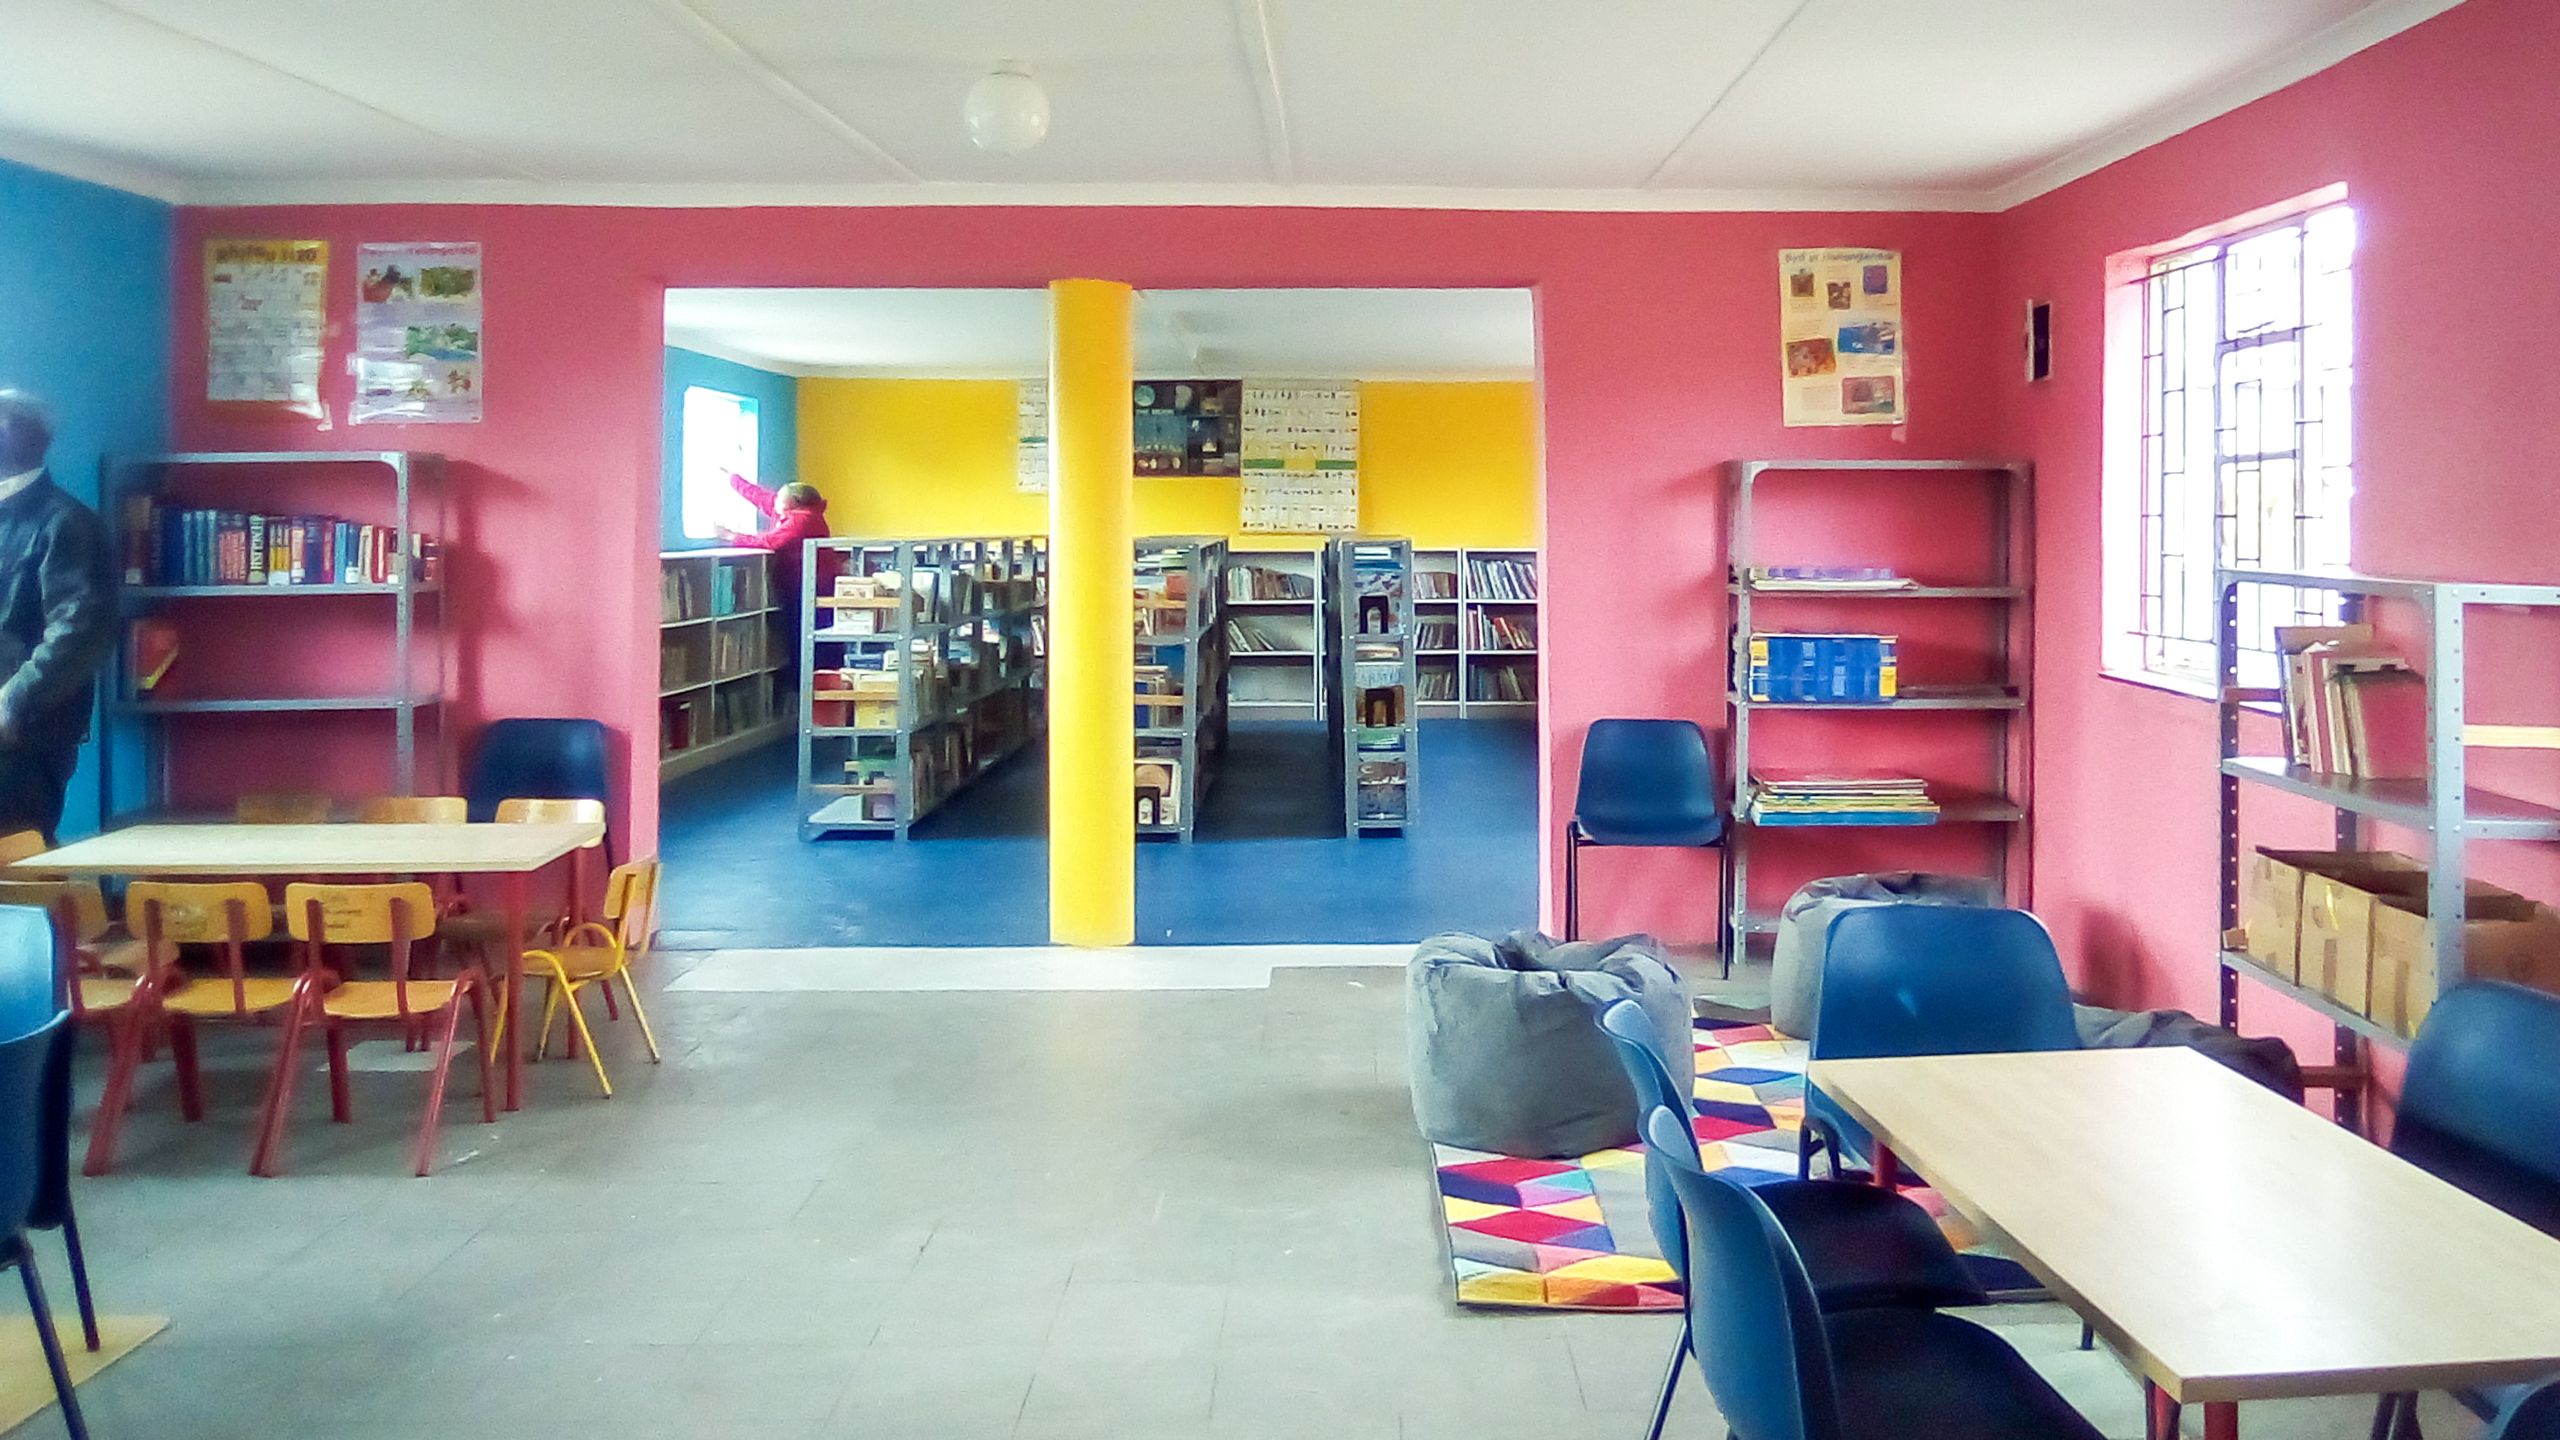 New school library